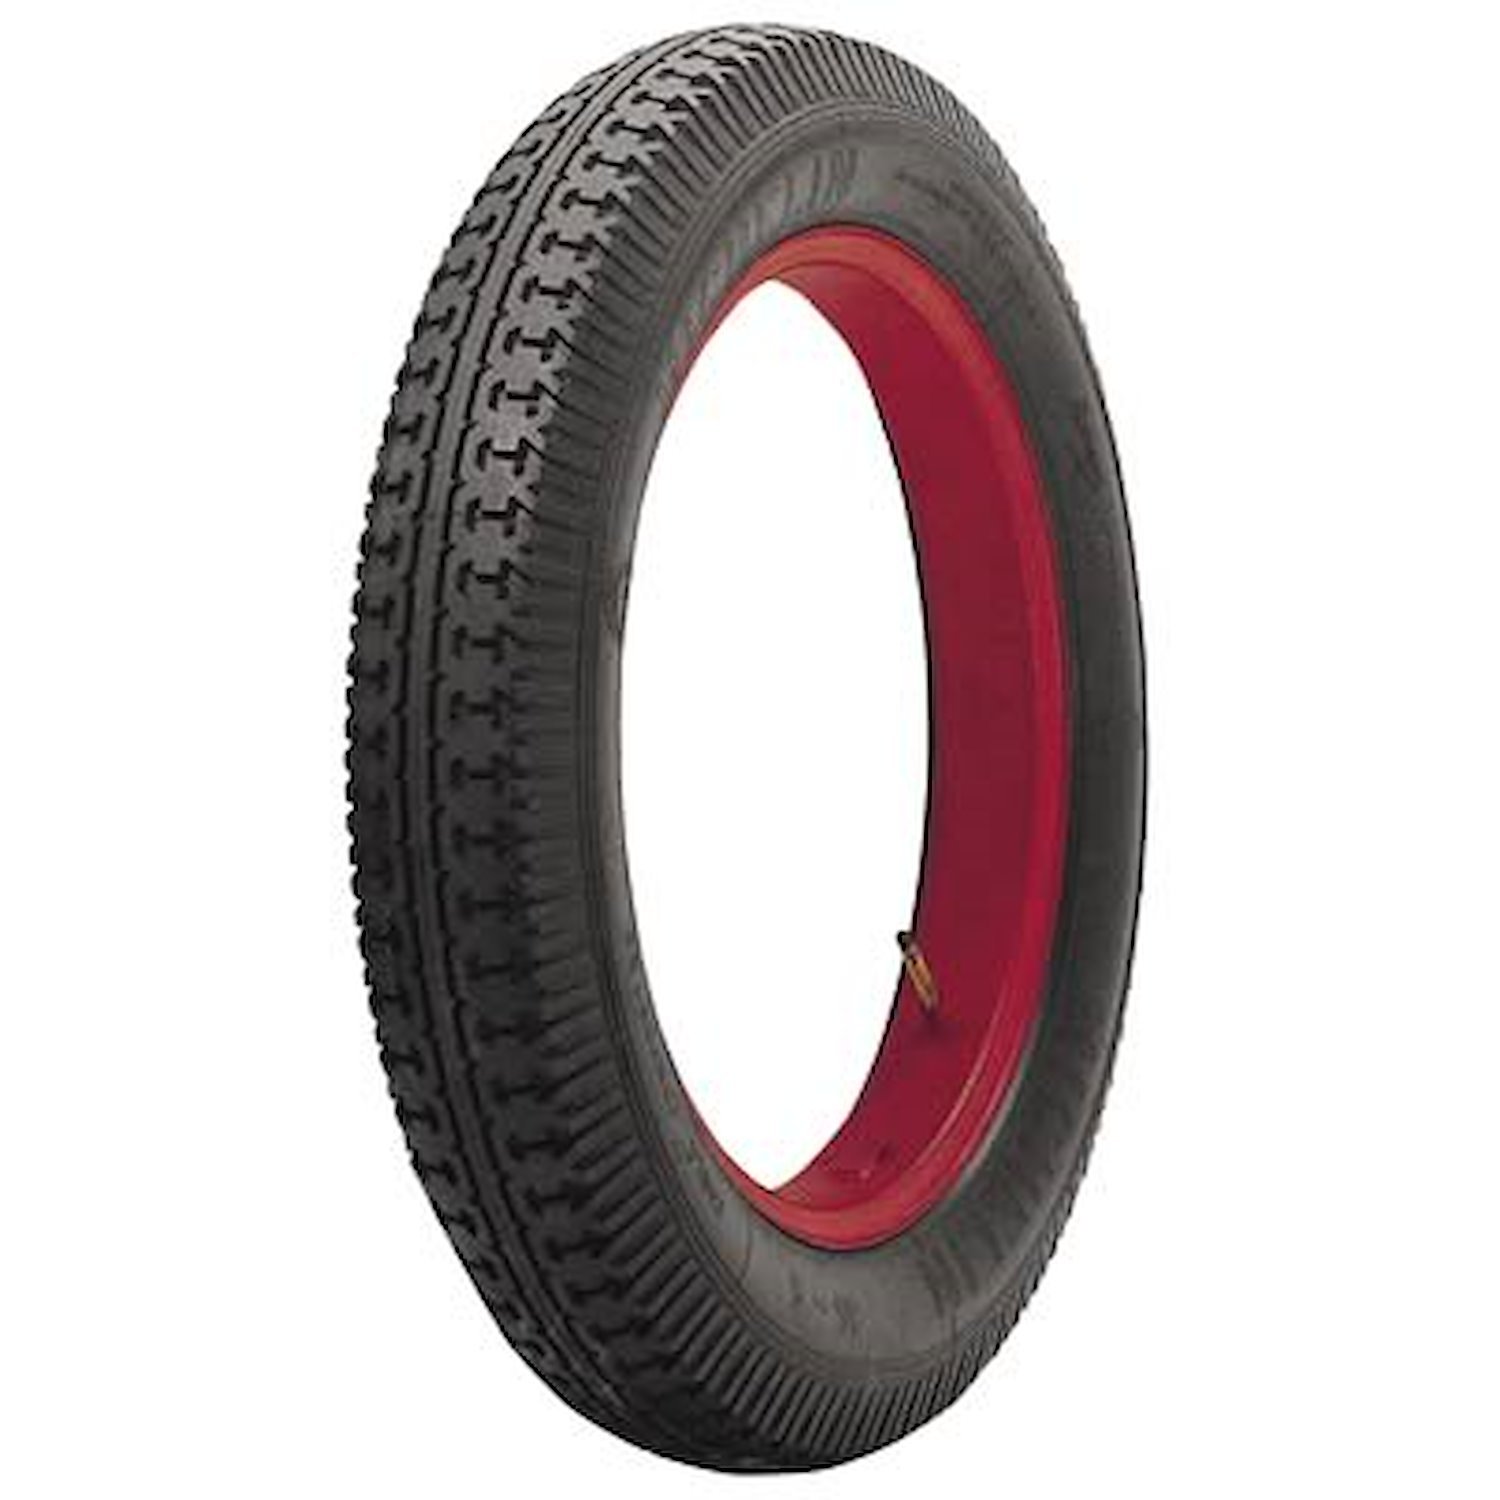 72901 Tire, Michelin Double Rivet, 525/600-19